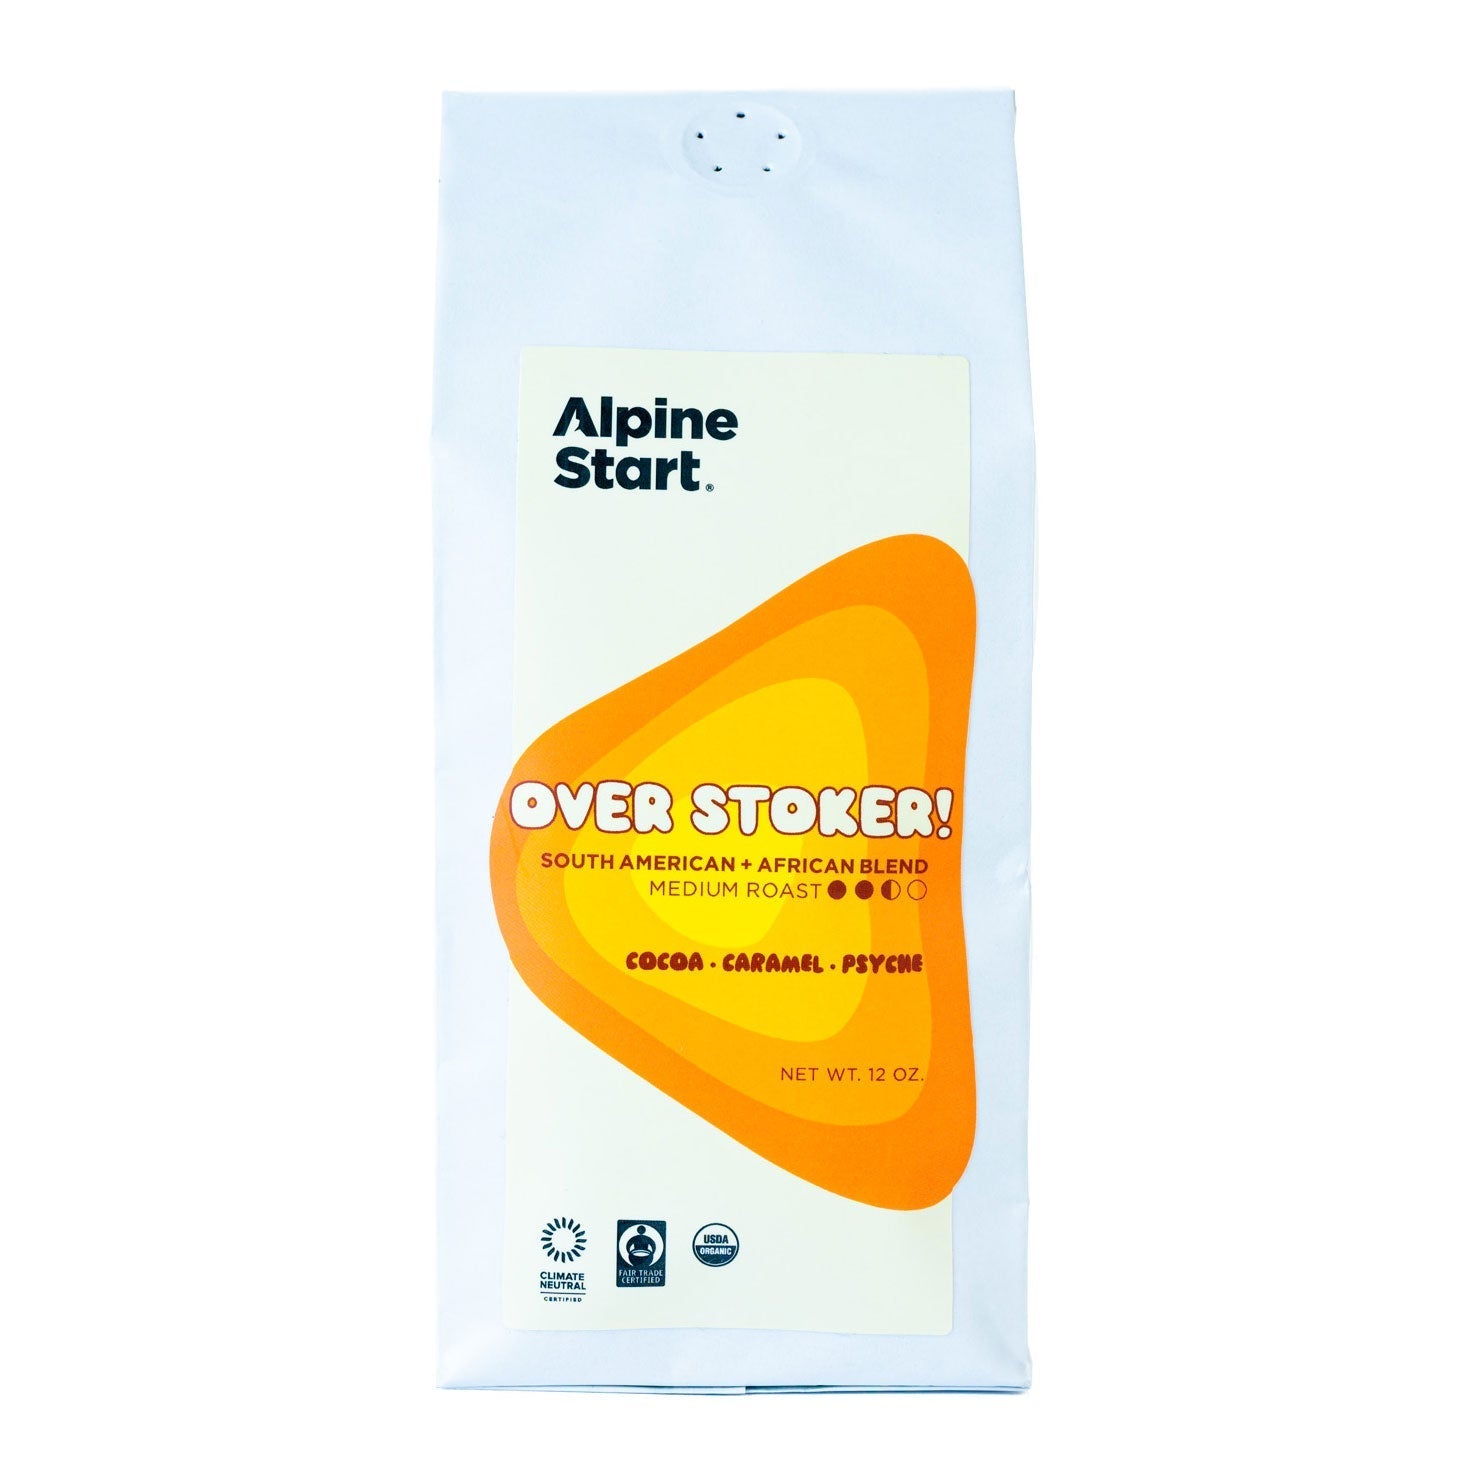 OCU Overstoker! Whole Bean Coffee - Alpine Start